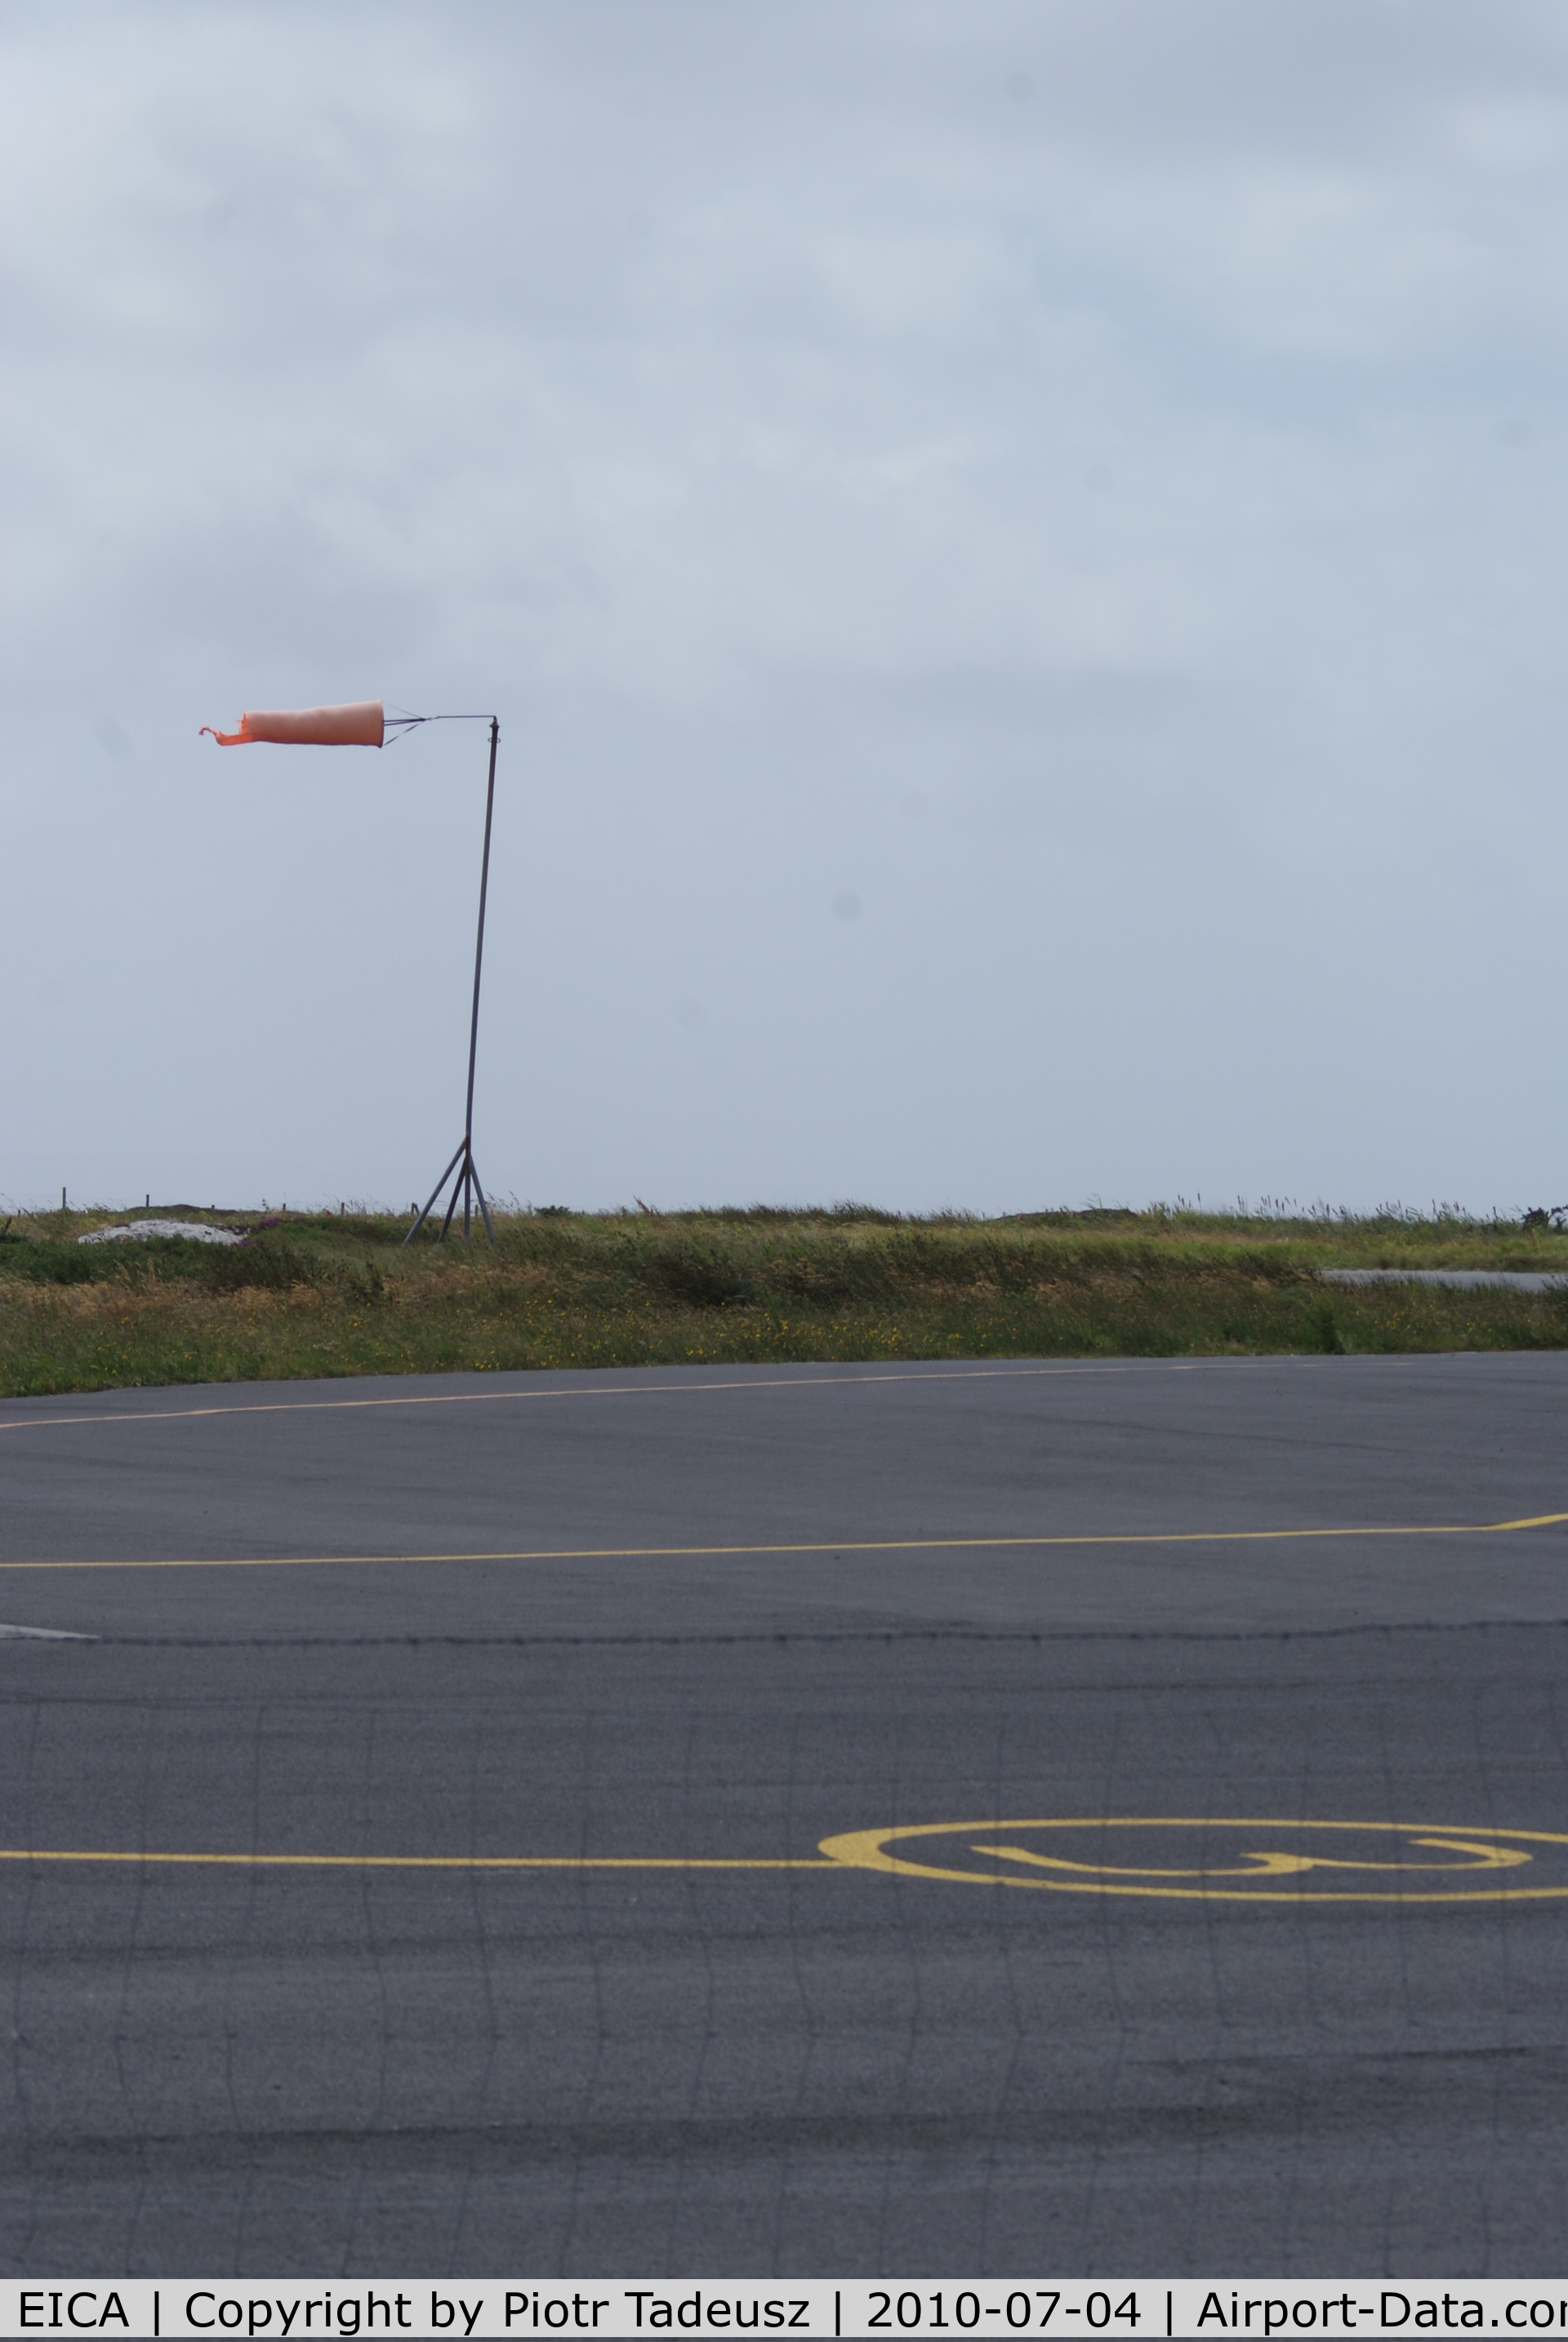 Connemara Regional Airport, Inverin, Connemara Ireland (EICA) - NNR